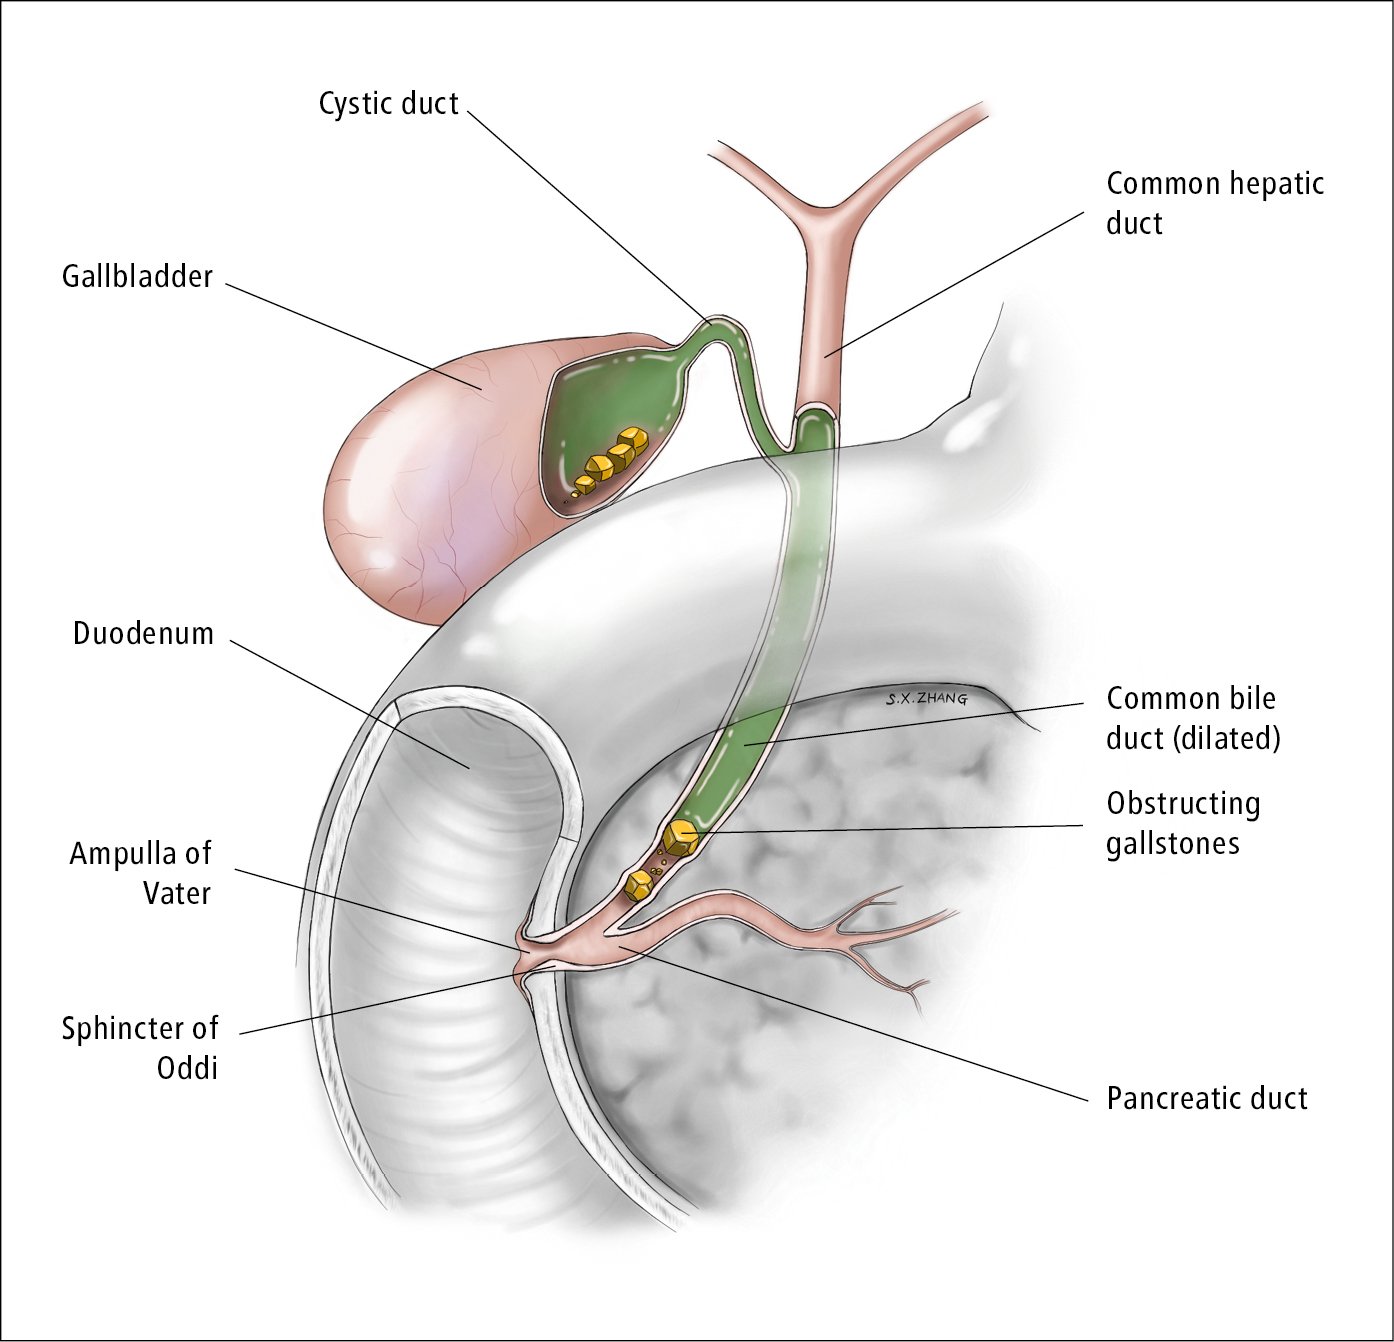 Villous papilloma gallbladder, Hpv and gallbladder